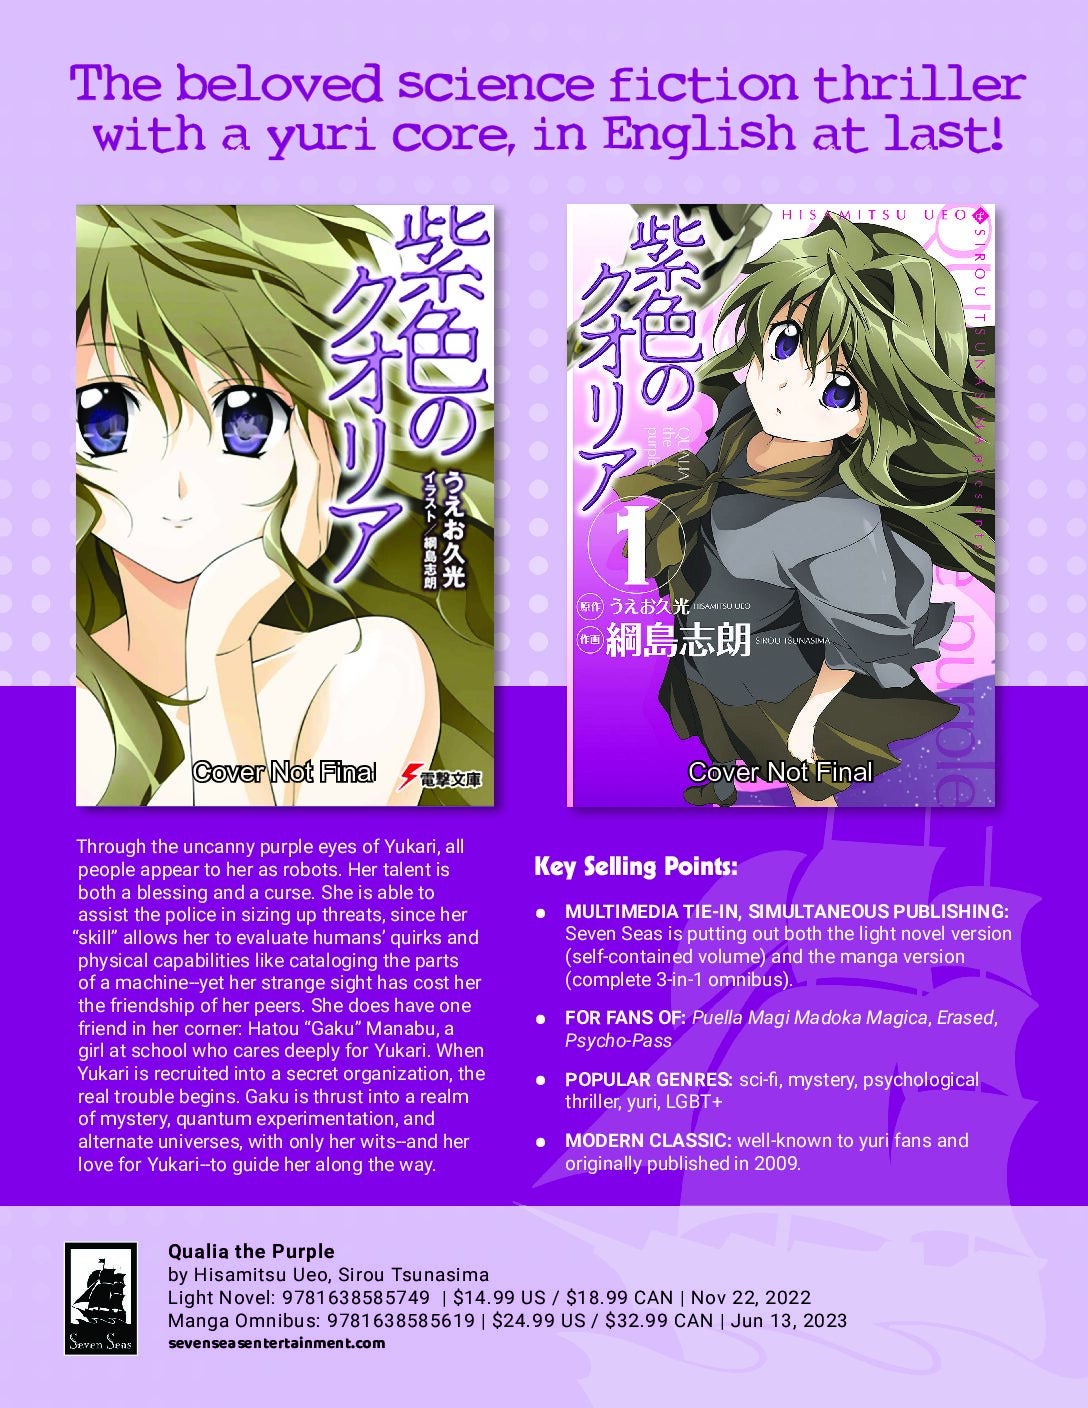 Qualia the Purple (Light Novel & Manga) cover